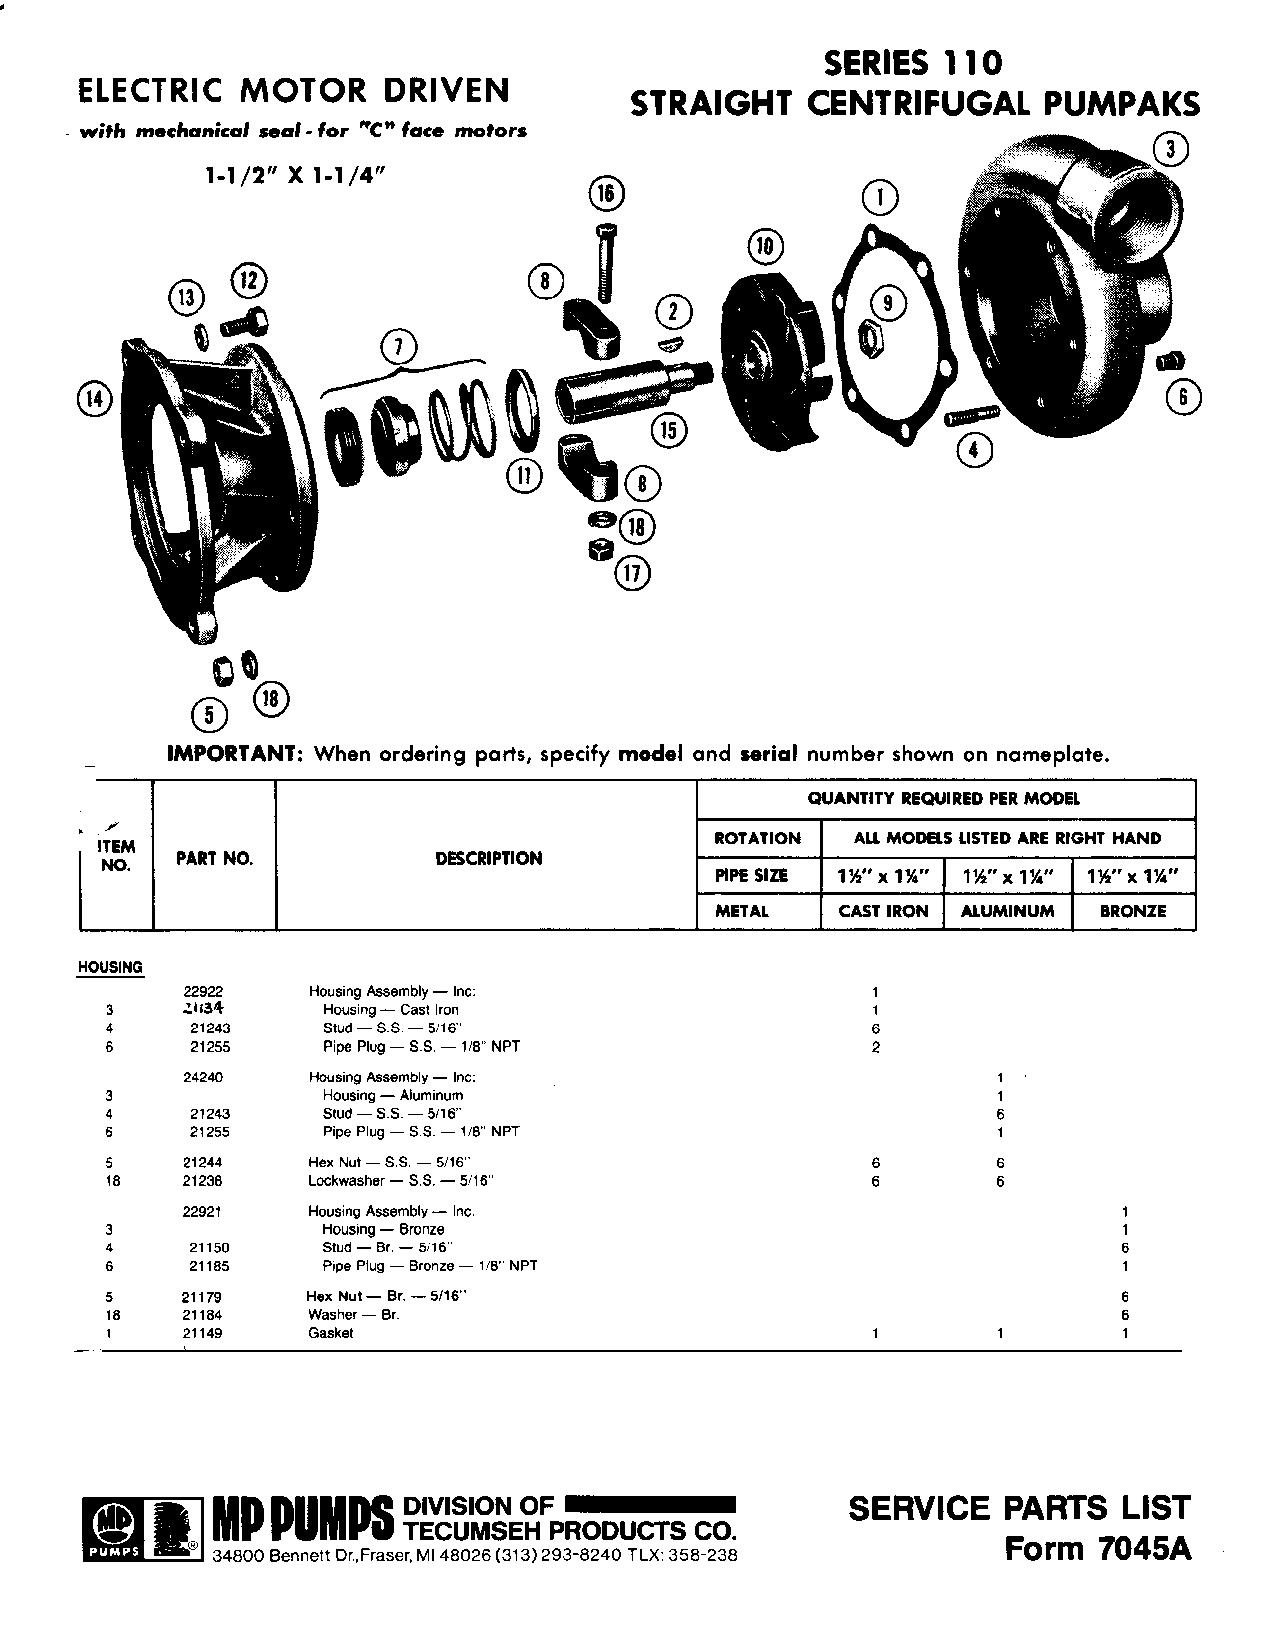 series-110_parts-list-7045a